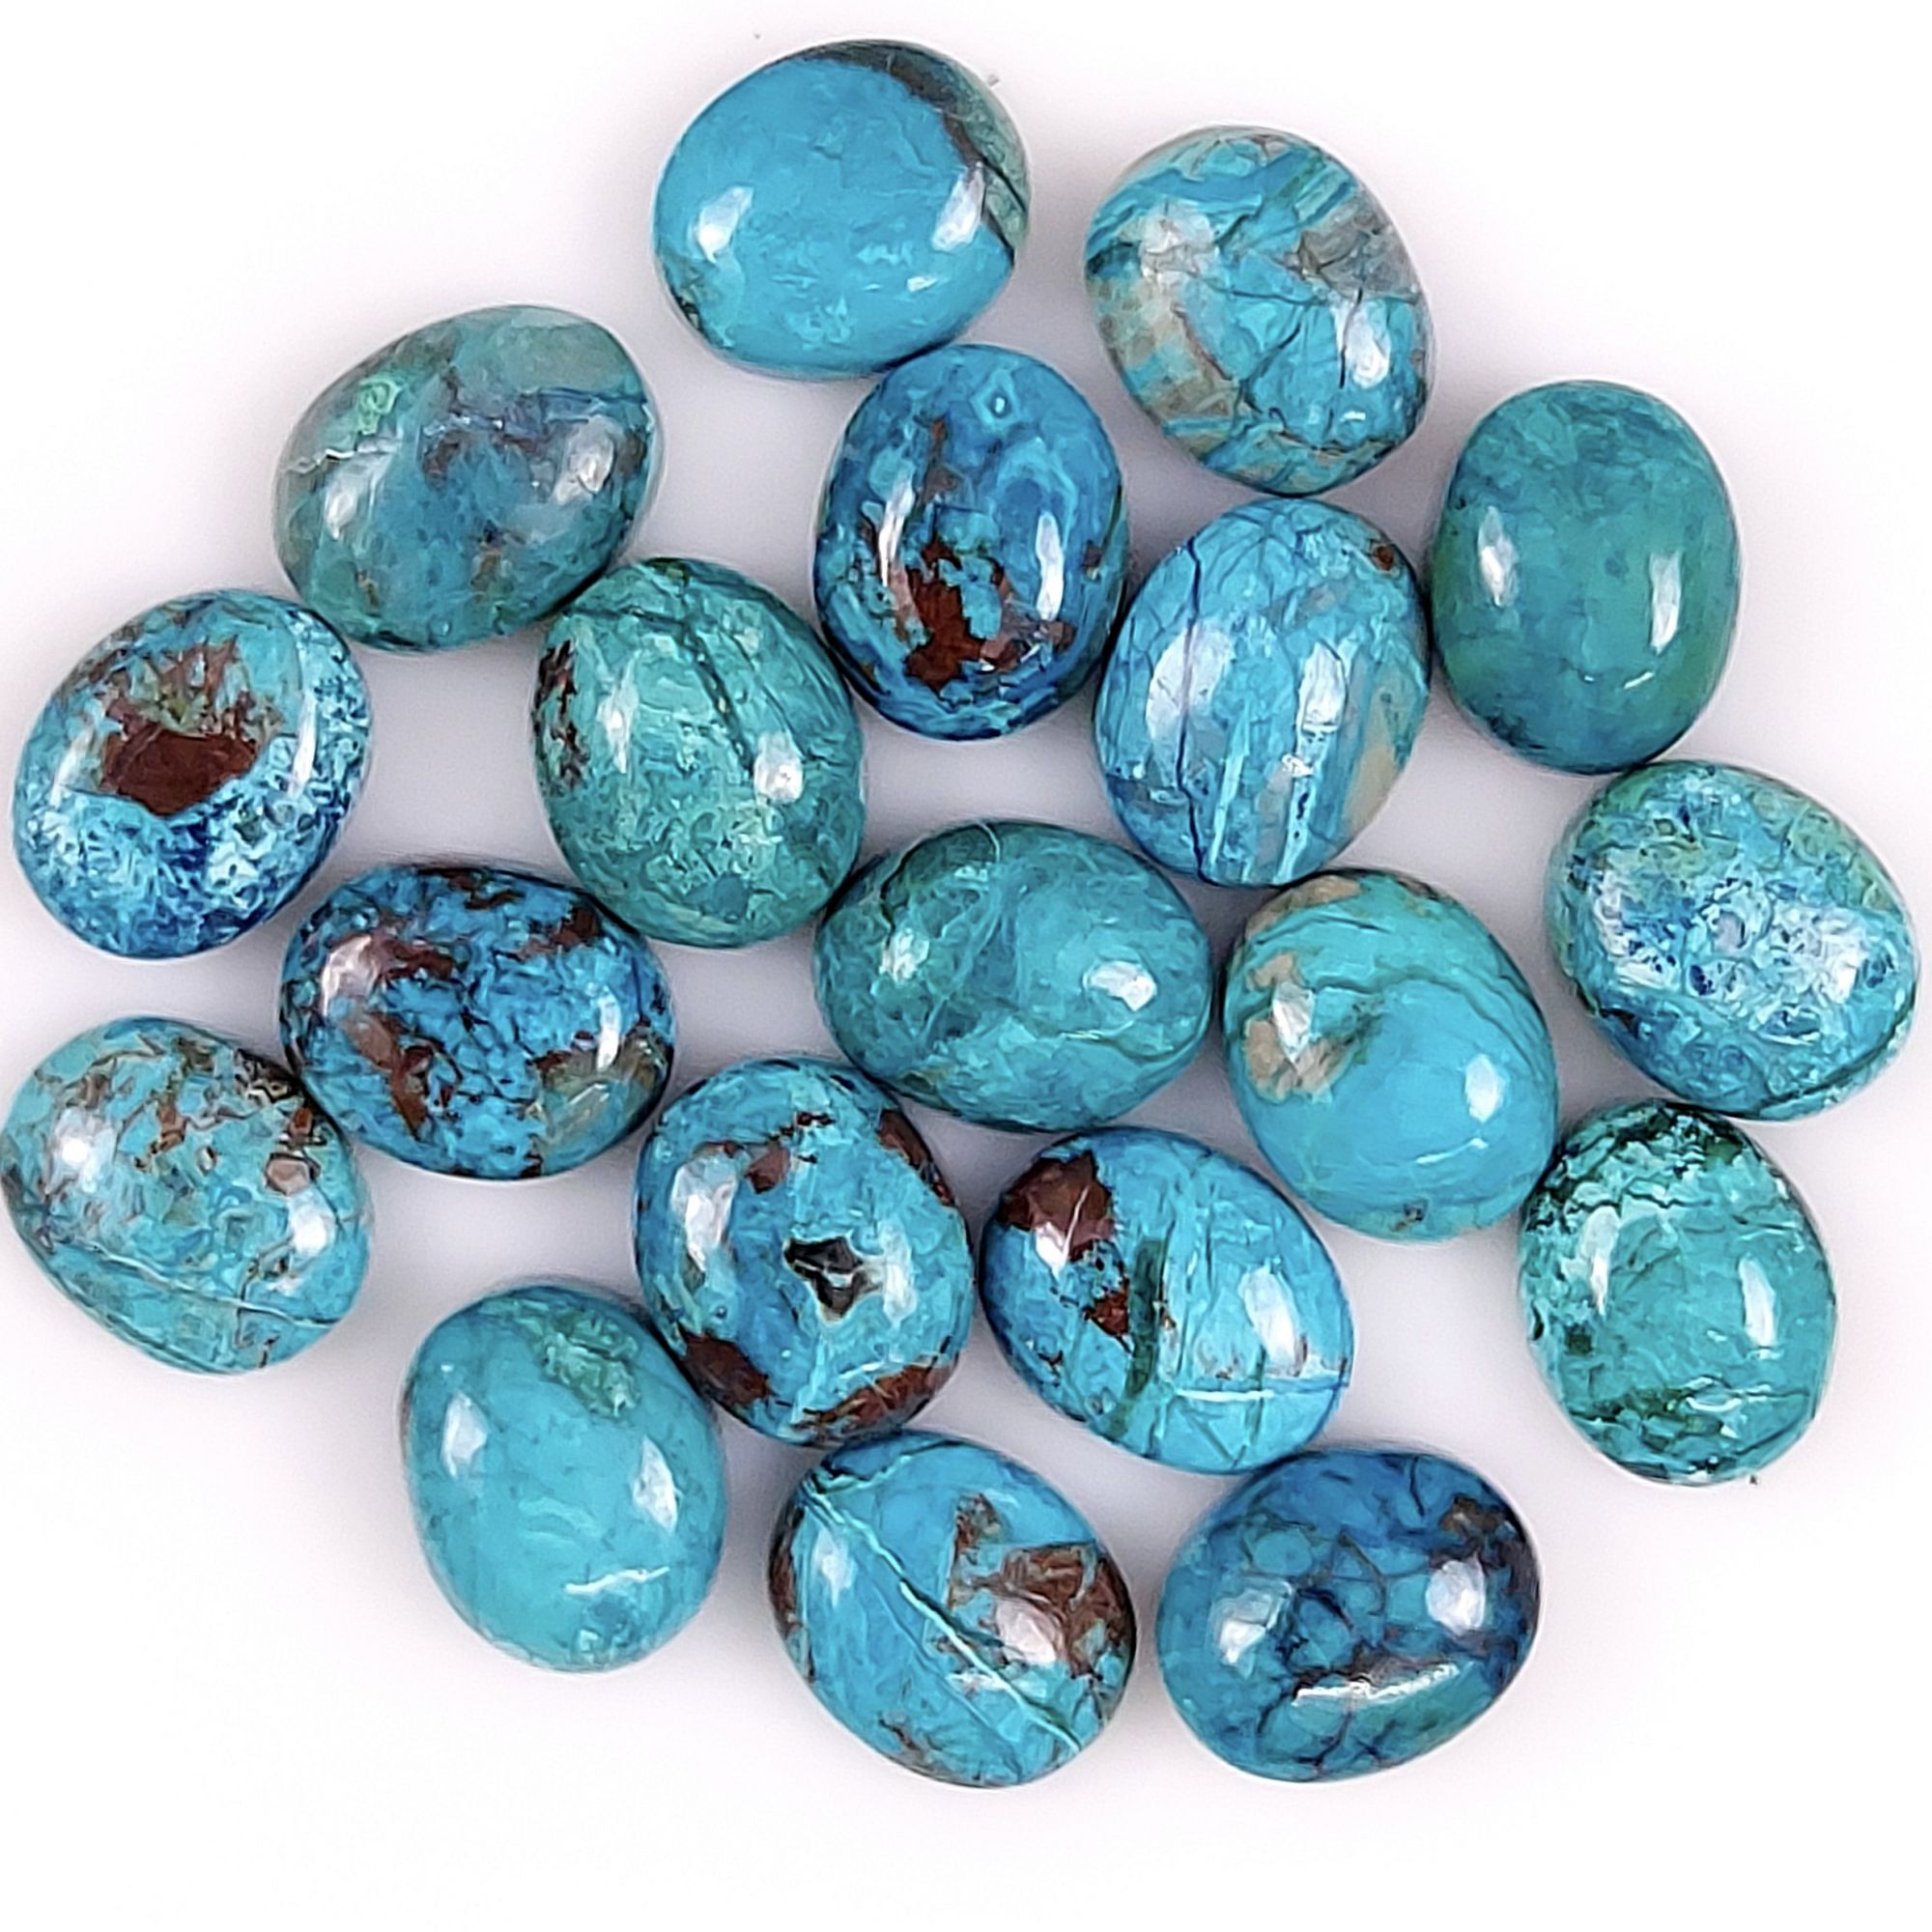 19 Pcs 56Cts Natural Chrysocolla Cabochon Lot Healing stone crystal,Loose gemstones Chrysocolla Mix Shape & Size Jewelry making Gemstone 10x8  7x5mm #G-1874